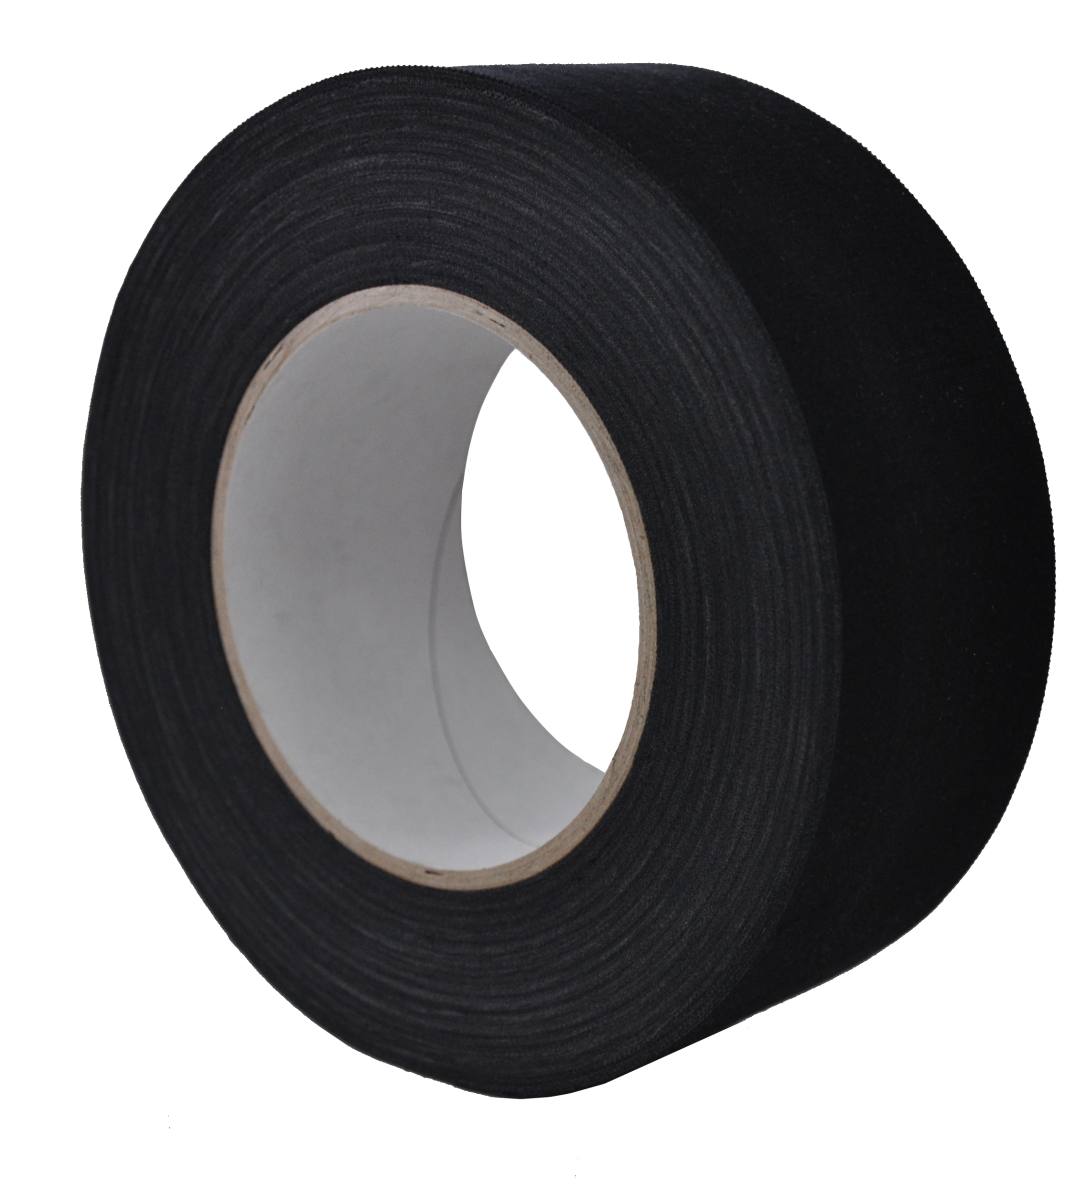 S-K-S 970 Raw fabric adhesive tape, 150 mm x 50 m, black, 0.240 mm